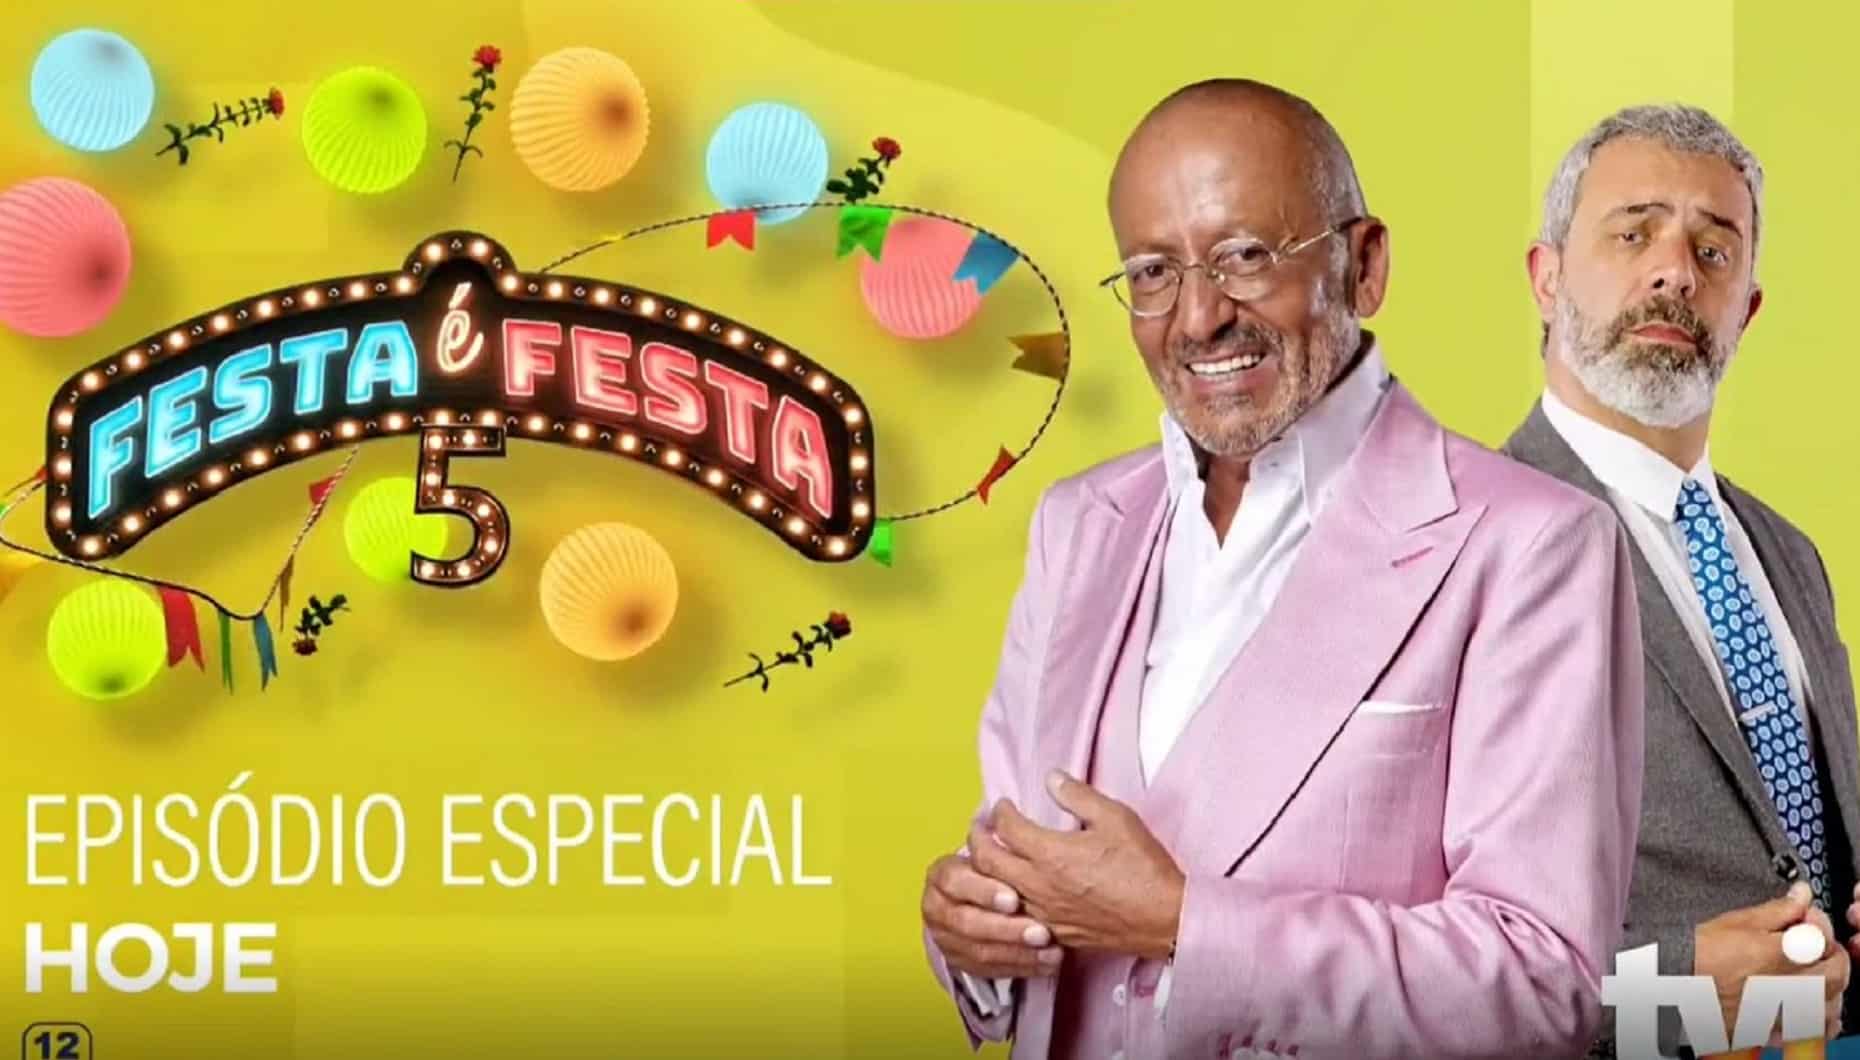 Manuel Luis Goucha, Festa E Festa, Pedro Alves